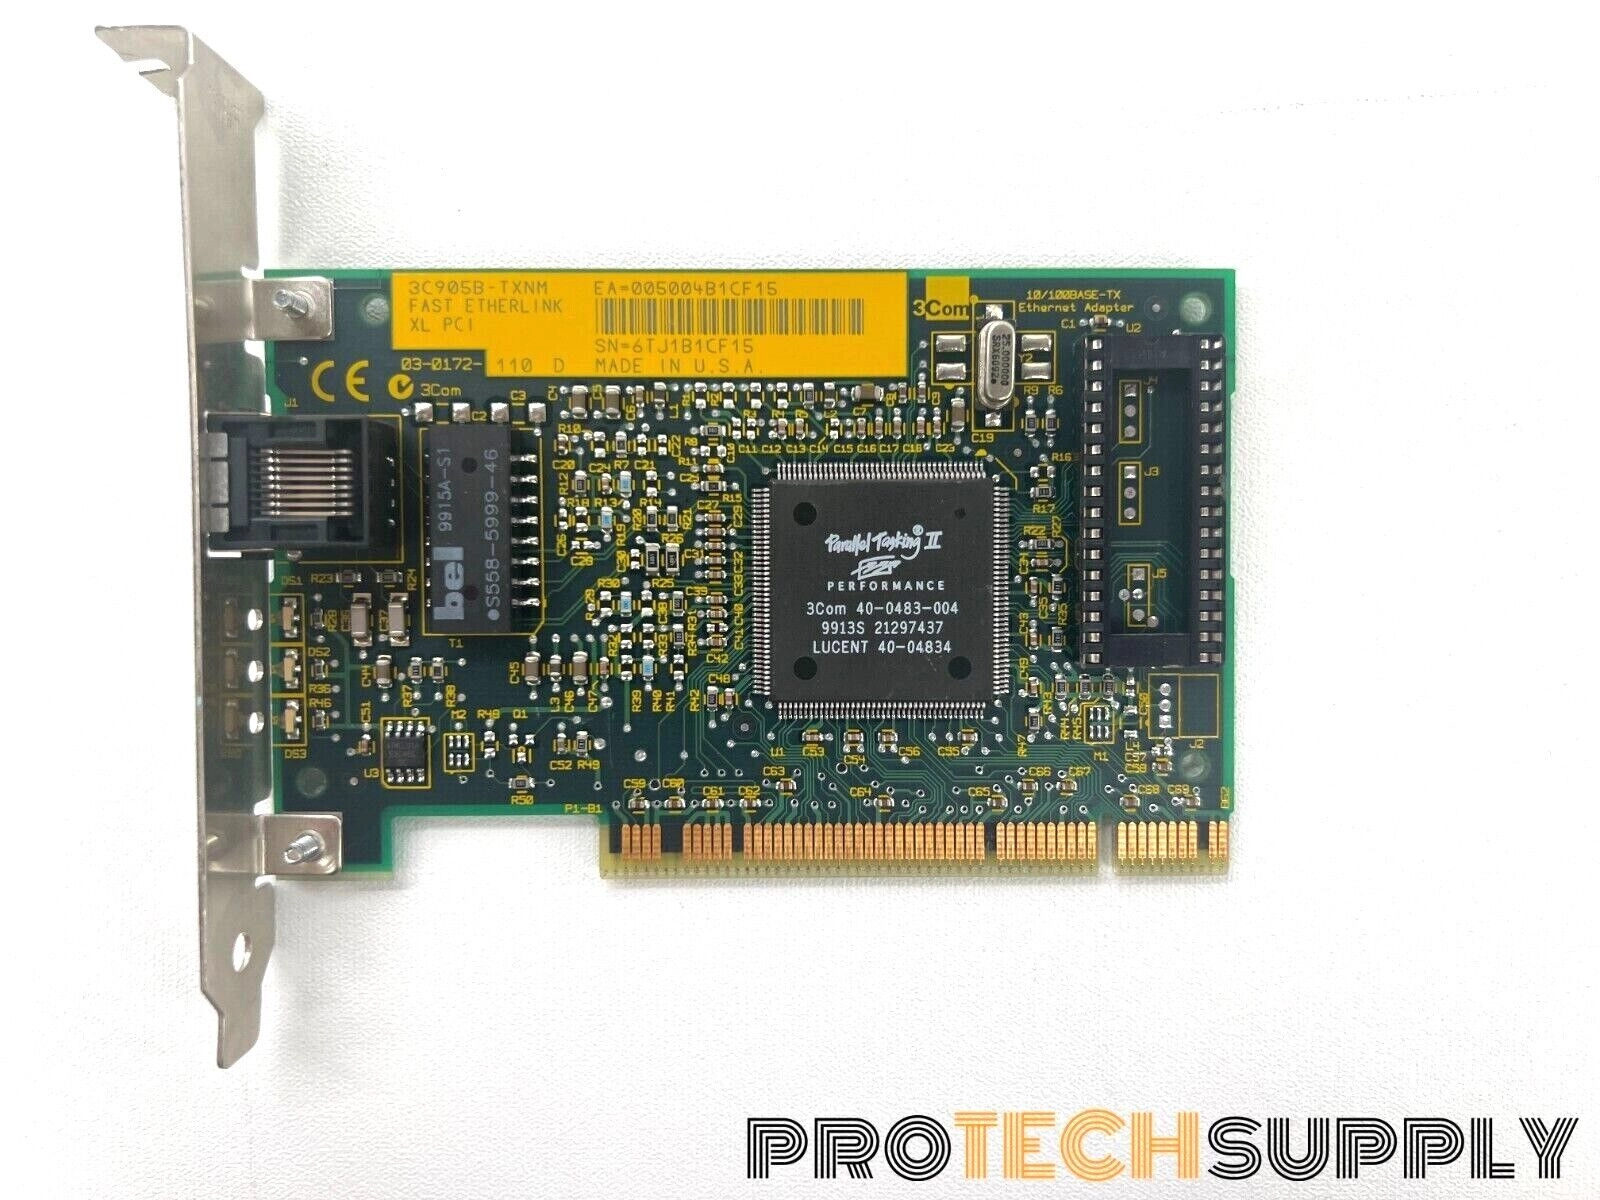 3com 3C905B-TXNM 10/100 Fast EtherLink XL PCI Netw